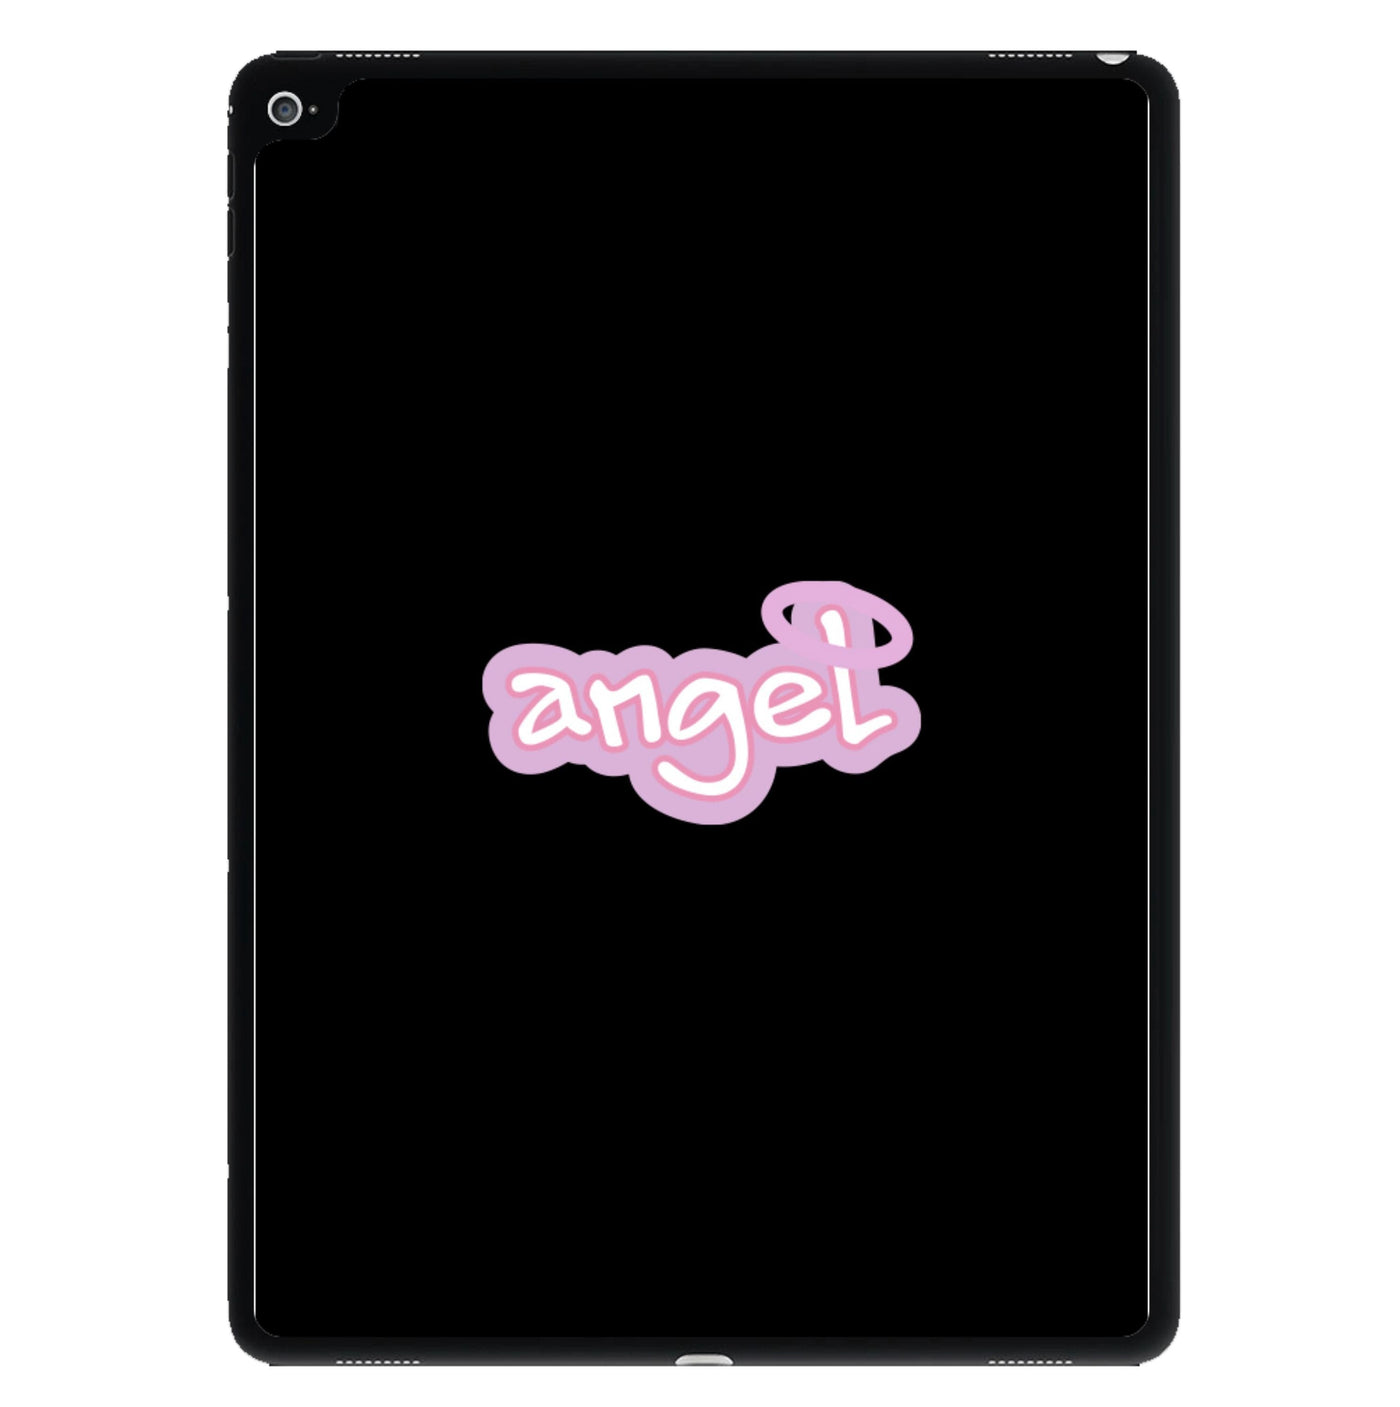 Angel - Loren Gray iPad Case